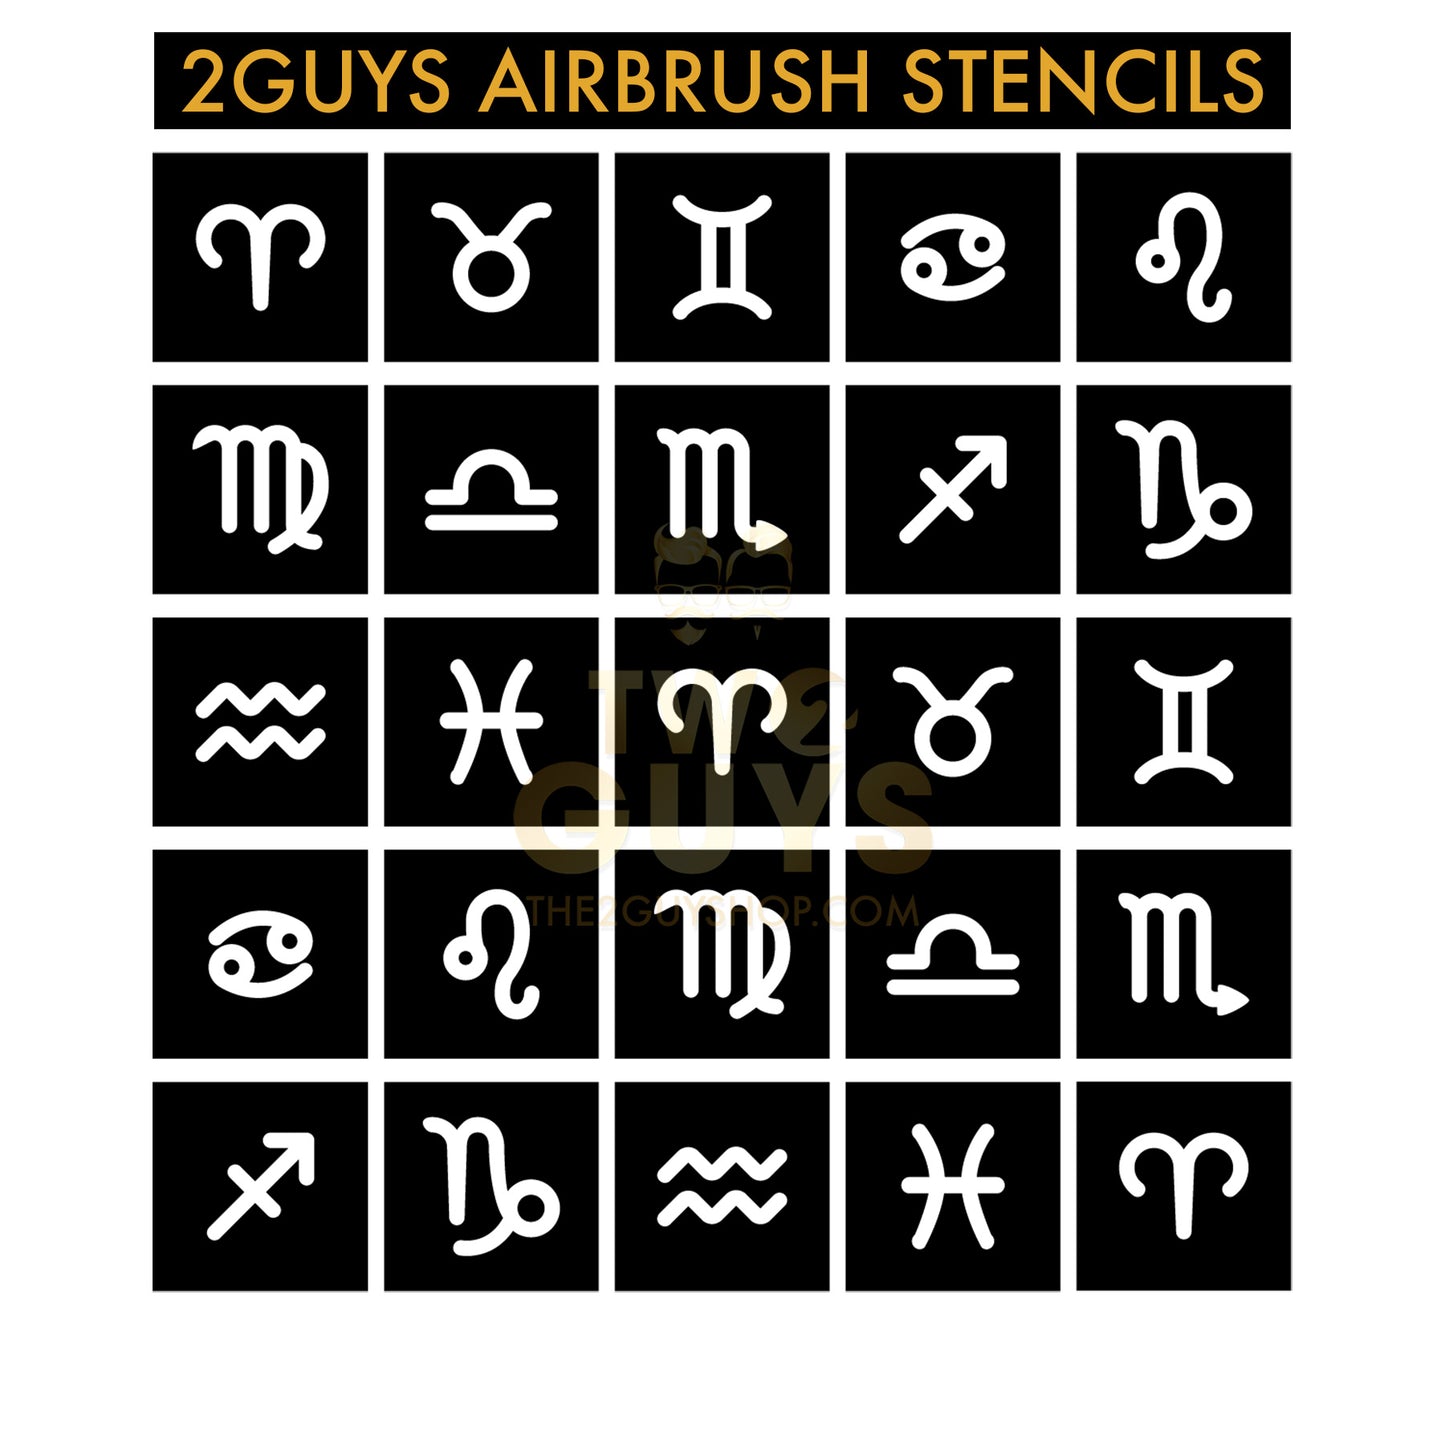 Zodiac Sign Airbrush Stencils